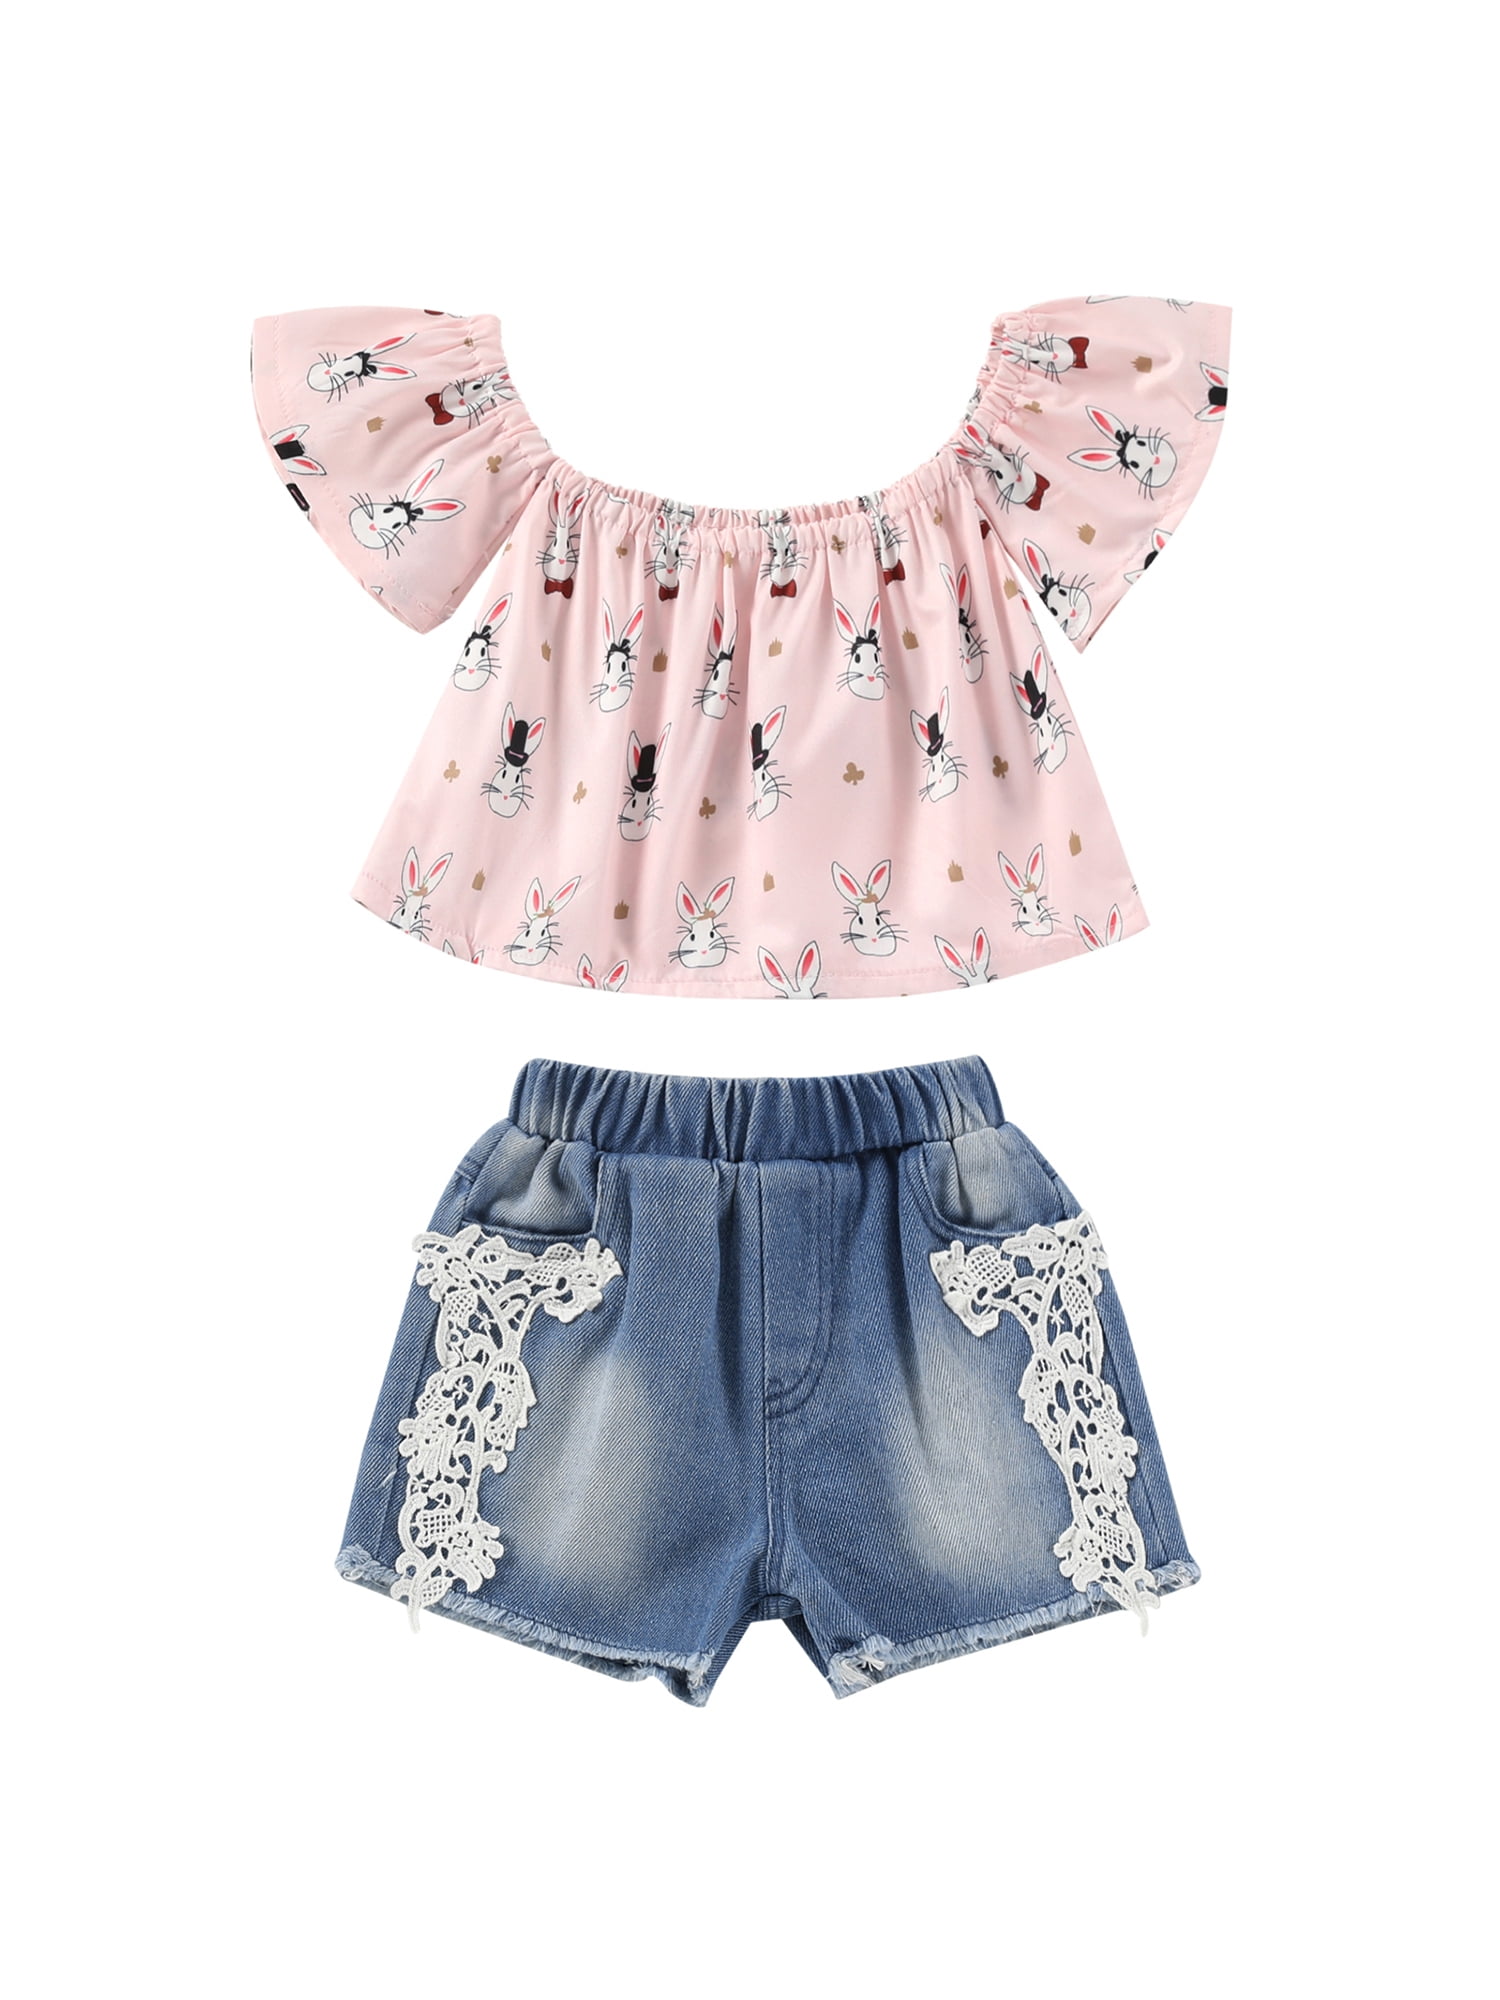 Denim Shorts Skirt Clothes Set Infant Newborn Baby Girl 2Pcs Outfits Lace Off Shoulder Tops